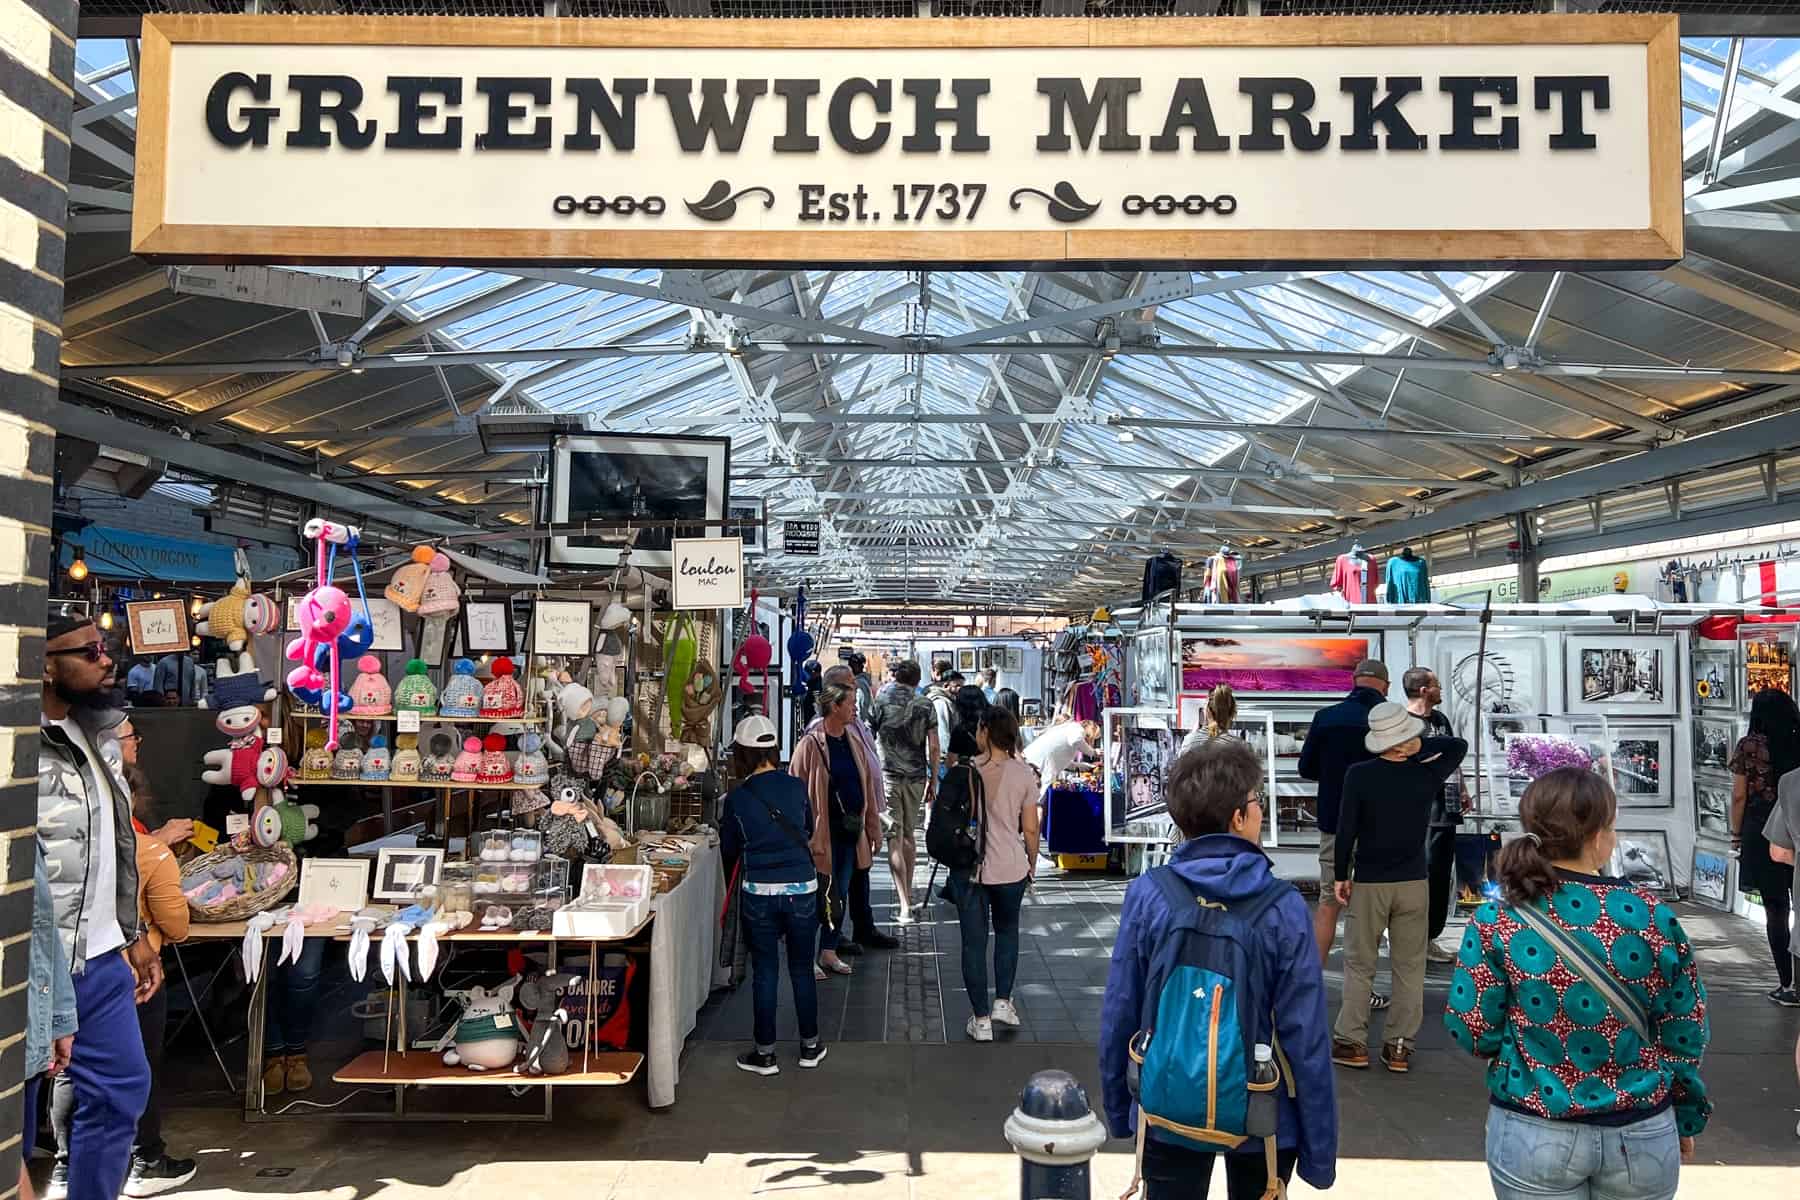 People gather around stalls selling artwork under a sign which reads: Greenwich Market Est.1737.